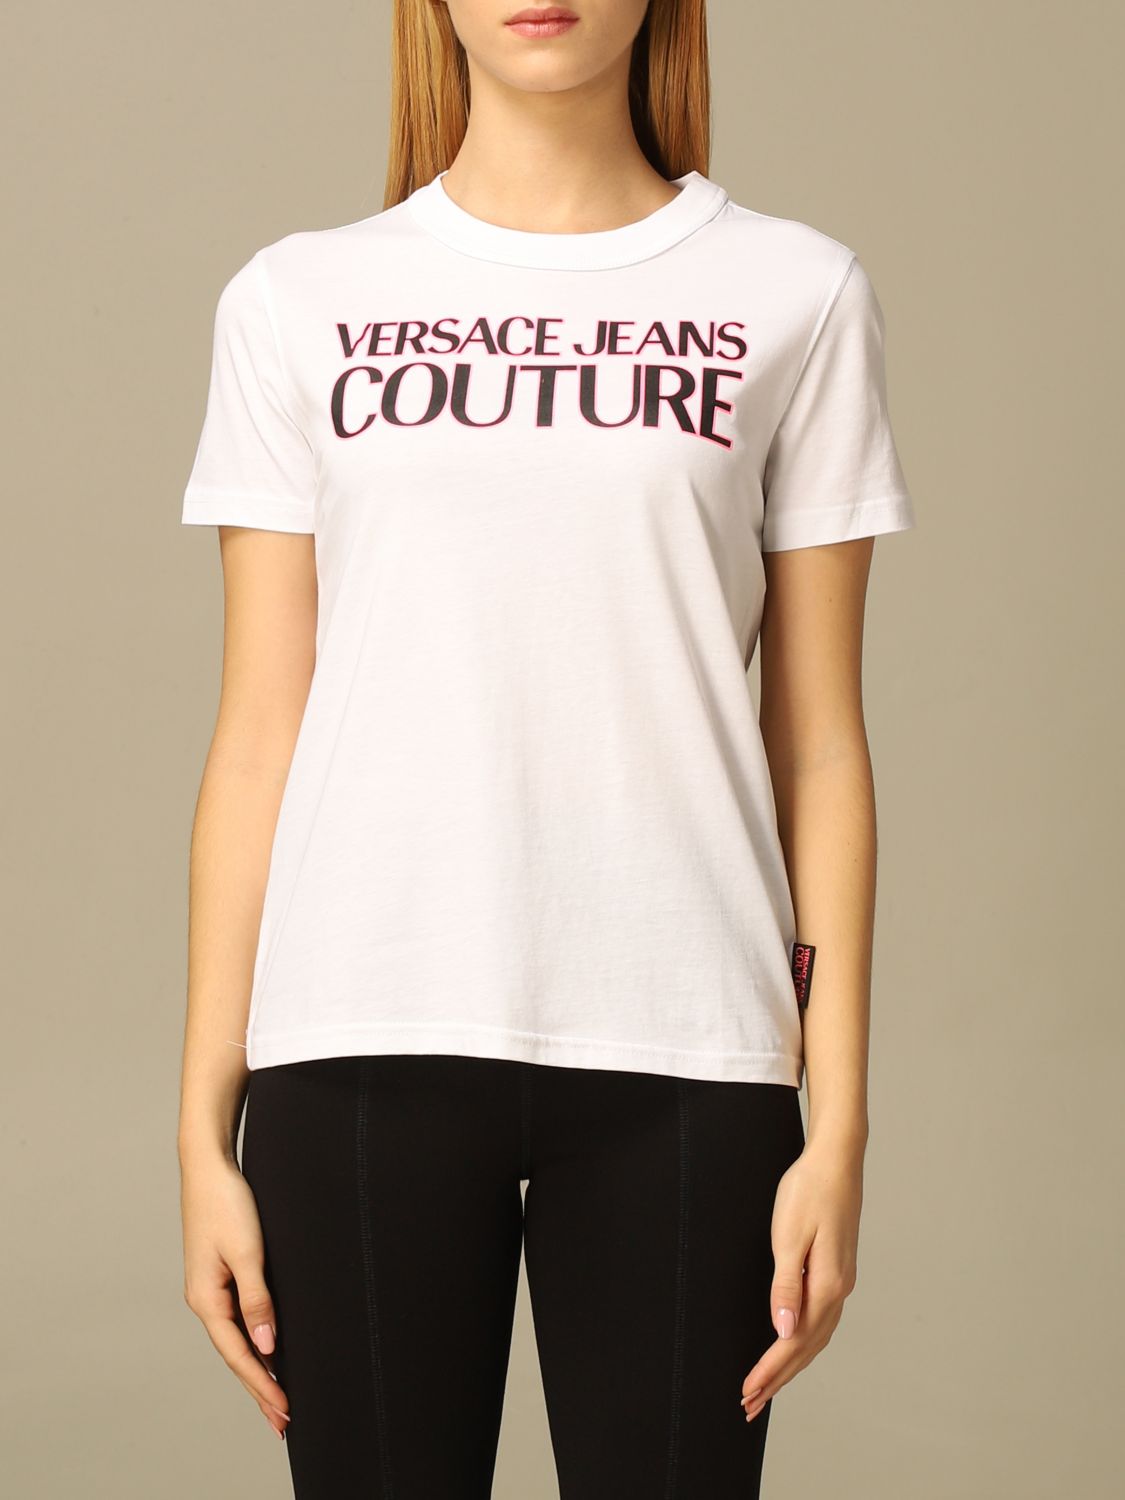 Versace Jeans Couture Womens Logo Tee Shirt White